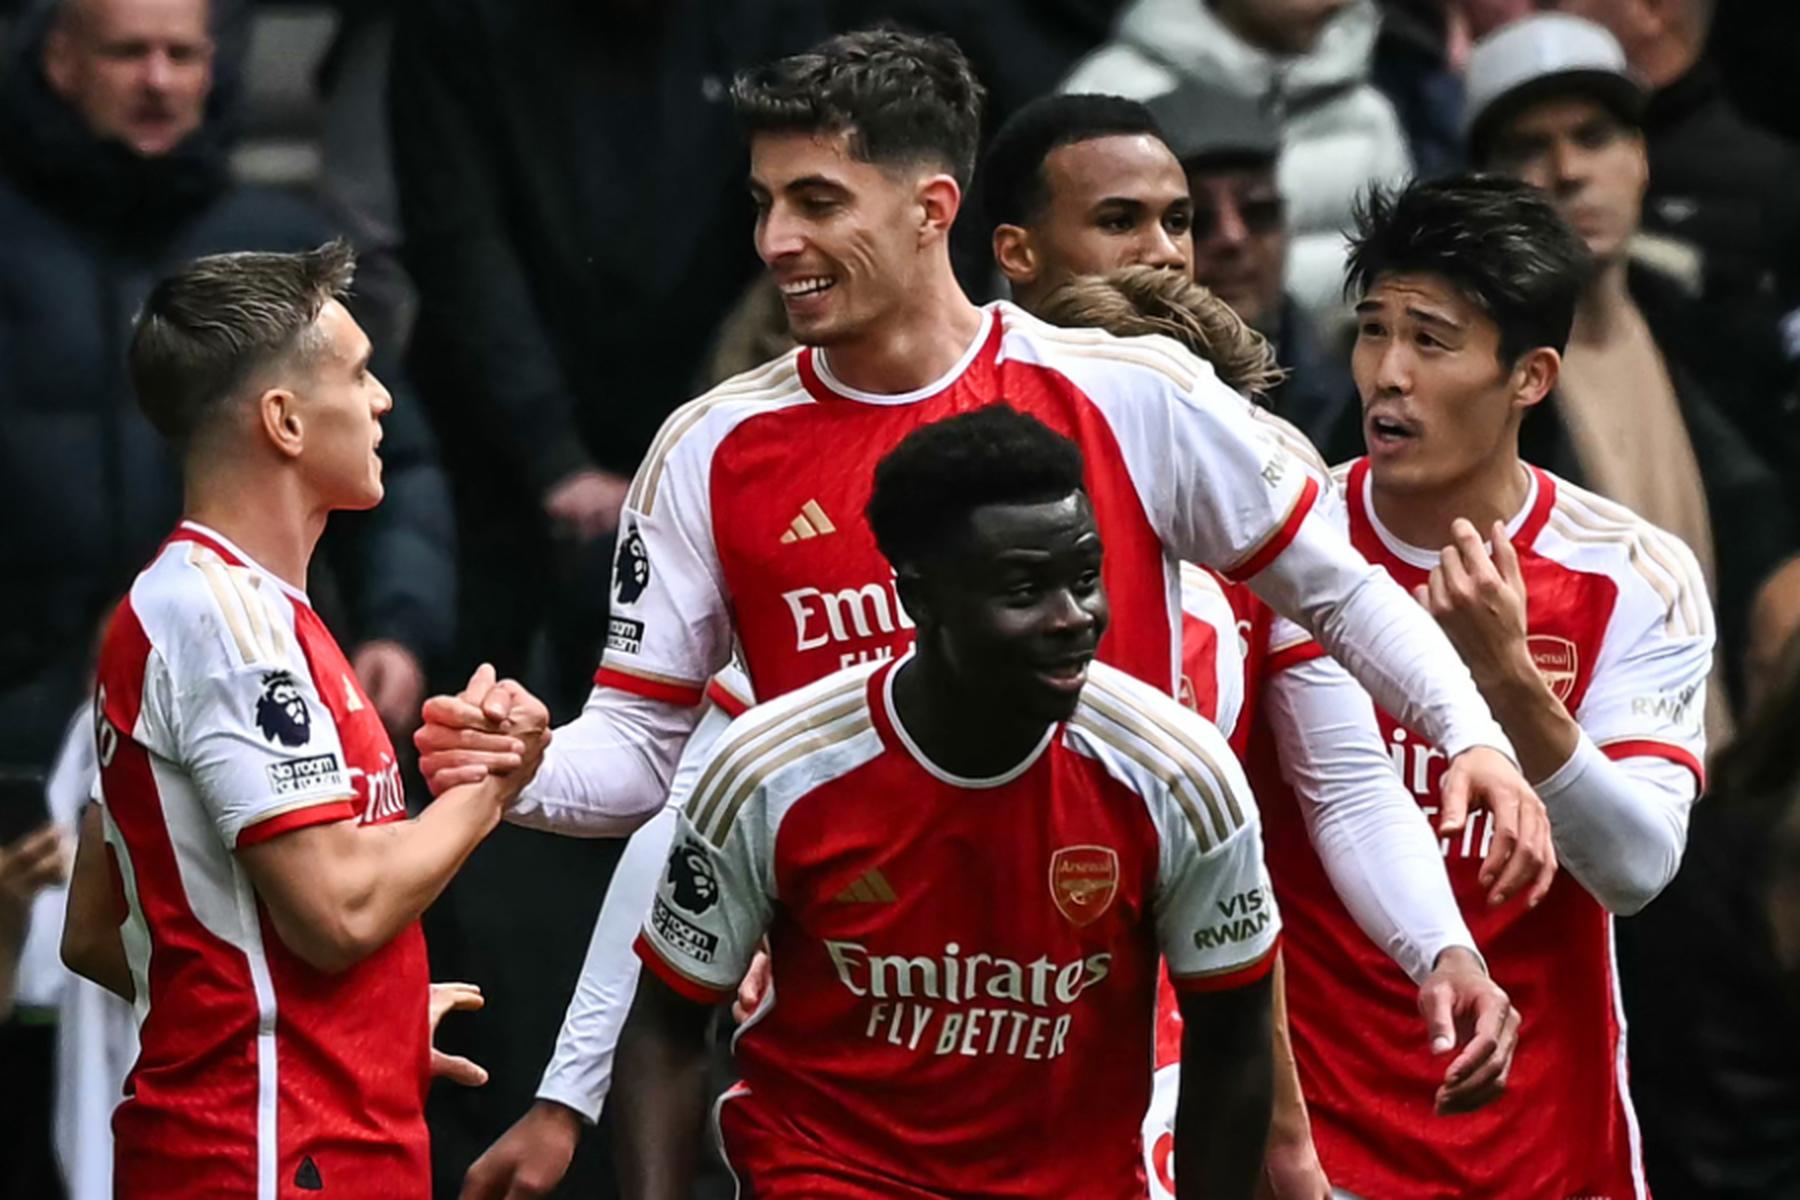 London: Arsenal feiert im Titelkampf 3:2-Sieg bei Tottenham